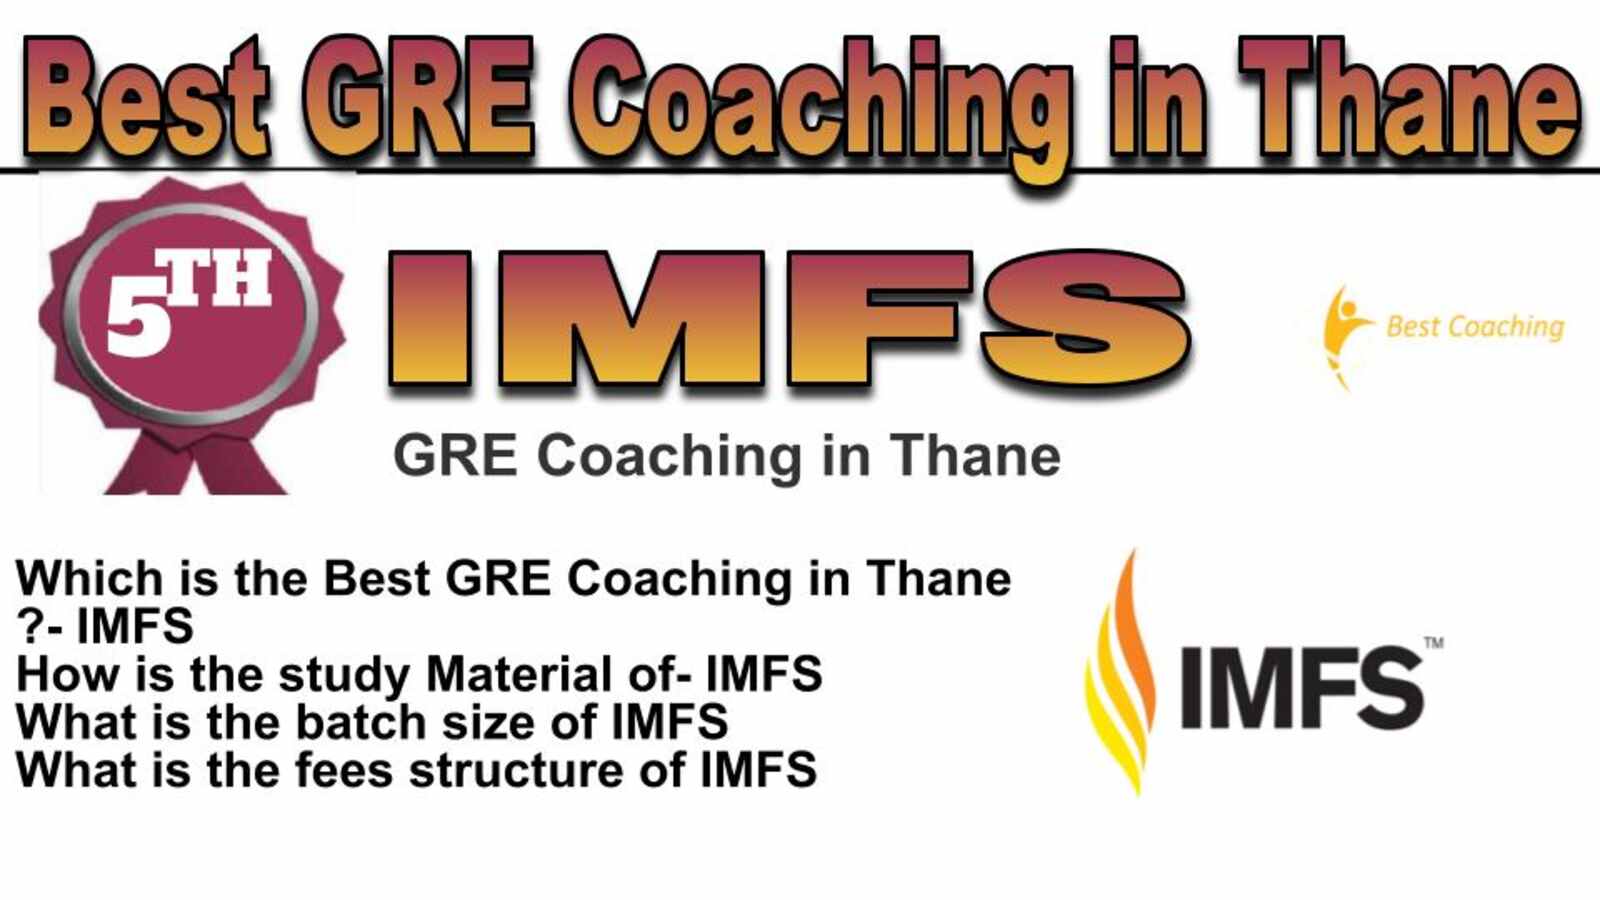 Rank 5 best GRE coaching in Thane